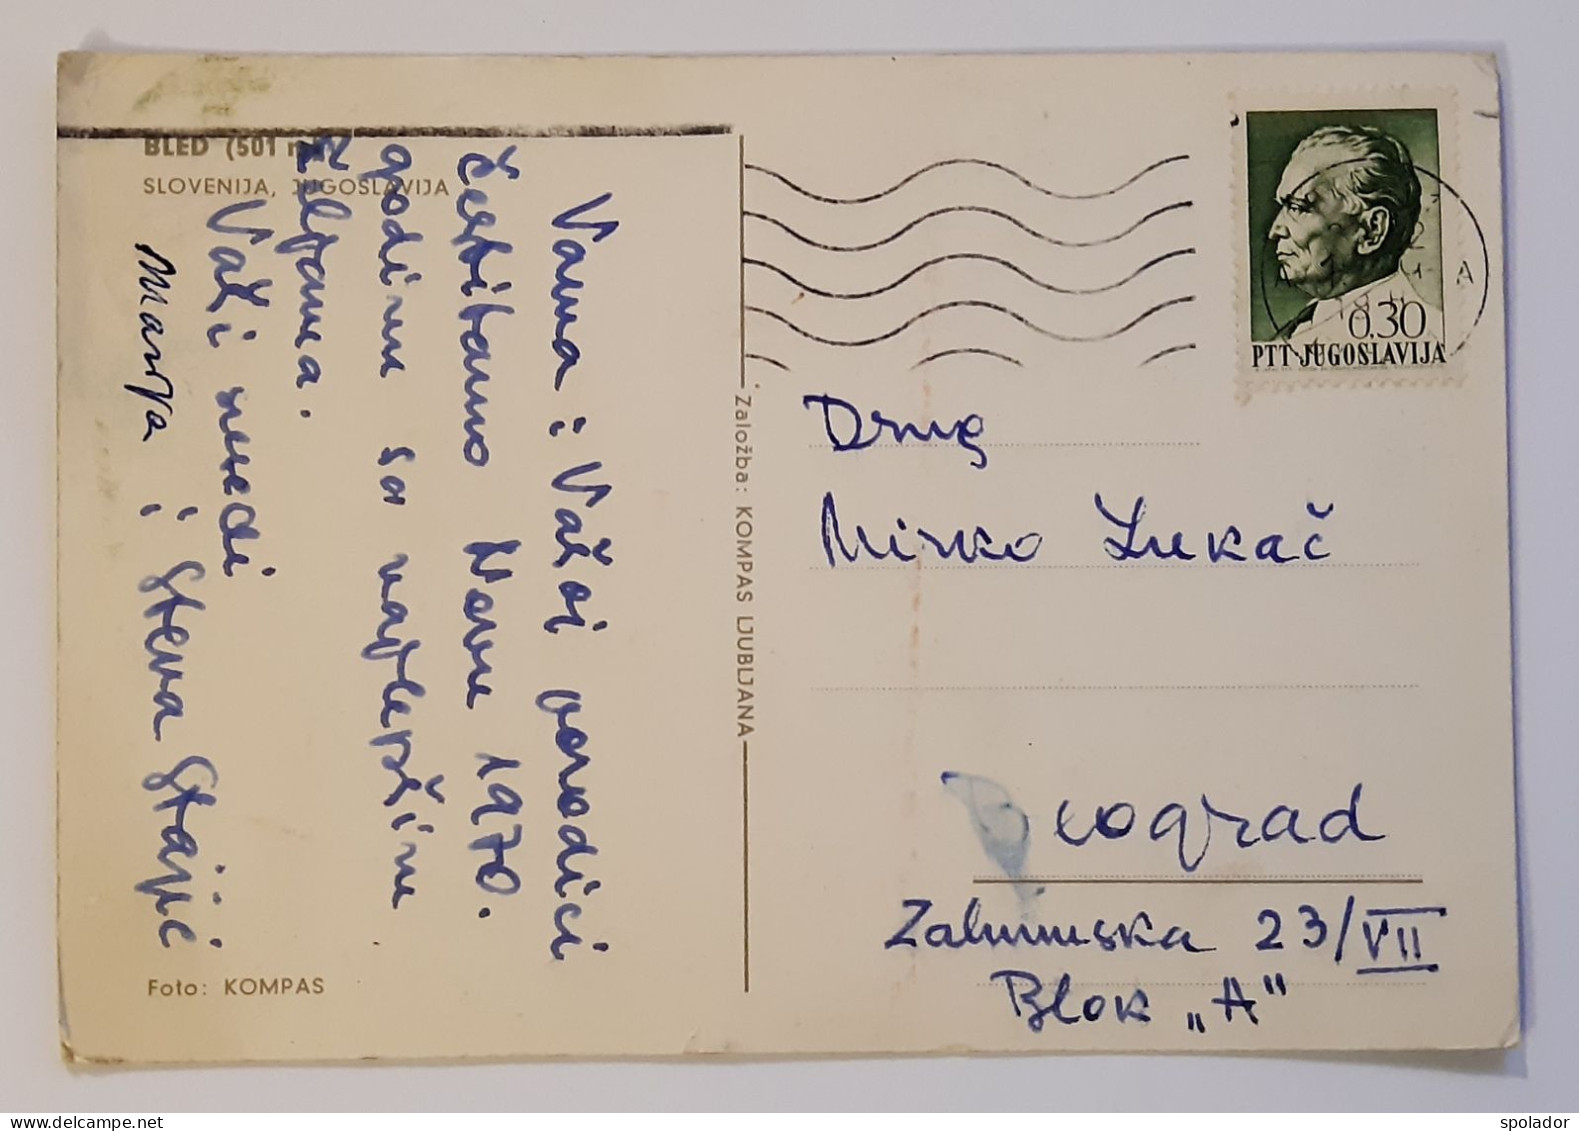 Ex-Yugoslavia-Vintage Photo Postcard-SLOVENIA-BLED-60s-used With Stamp-#11 - Yougoslavie